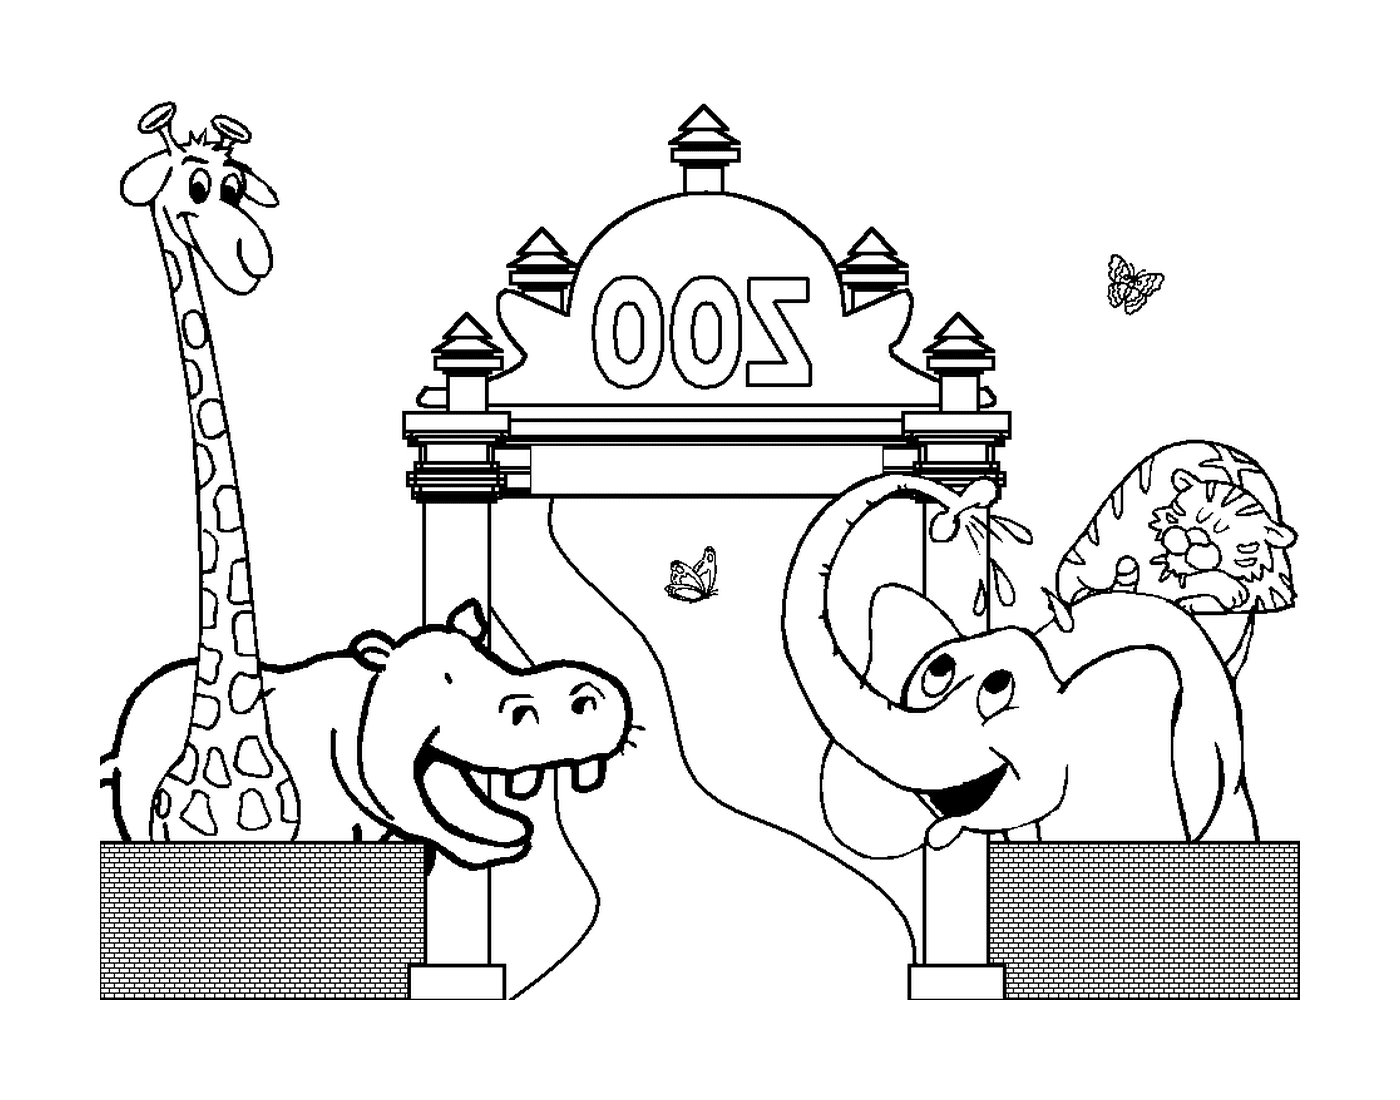  An elephant and a hippopotamus in a pen 